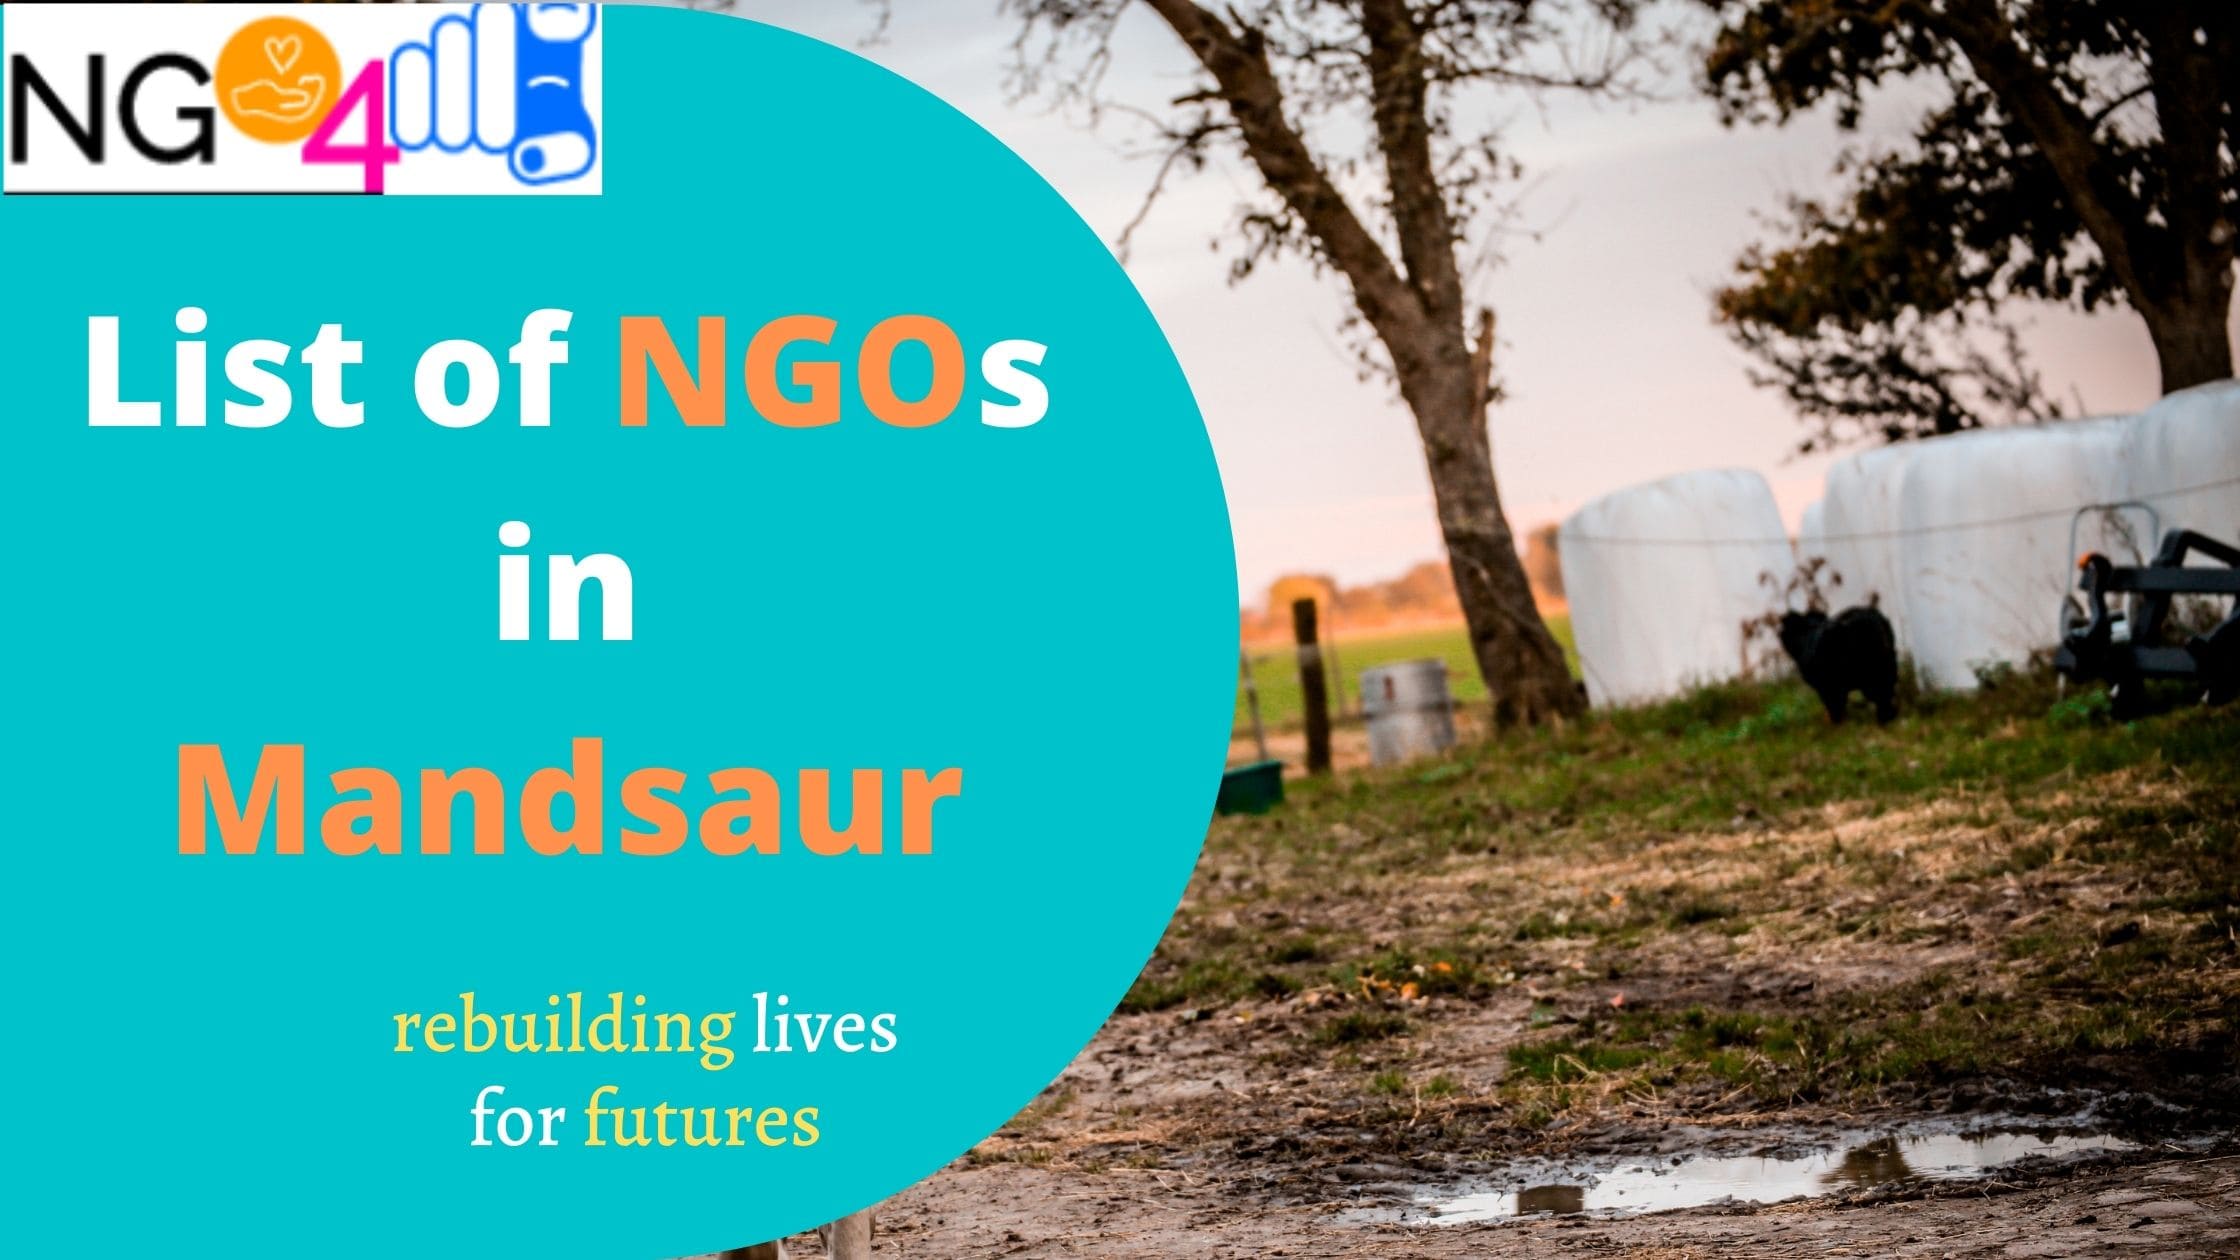 NGO in Mandsaur